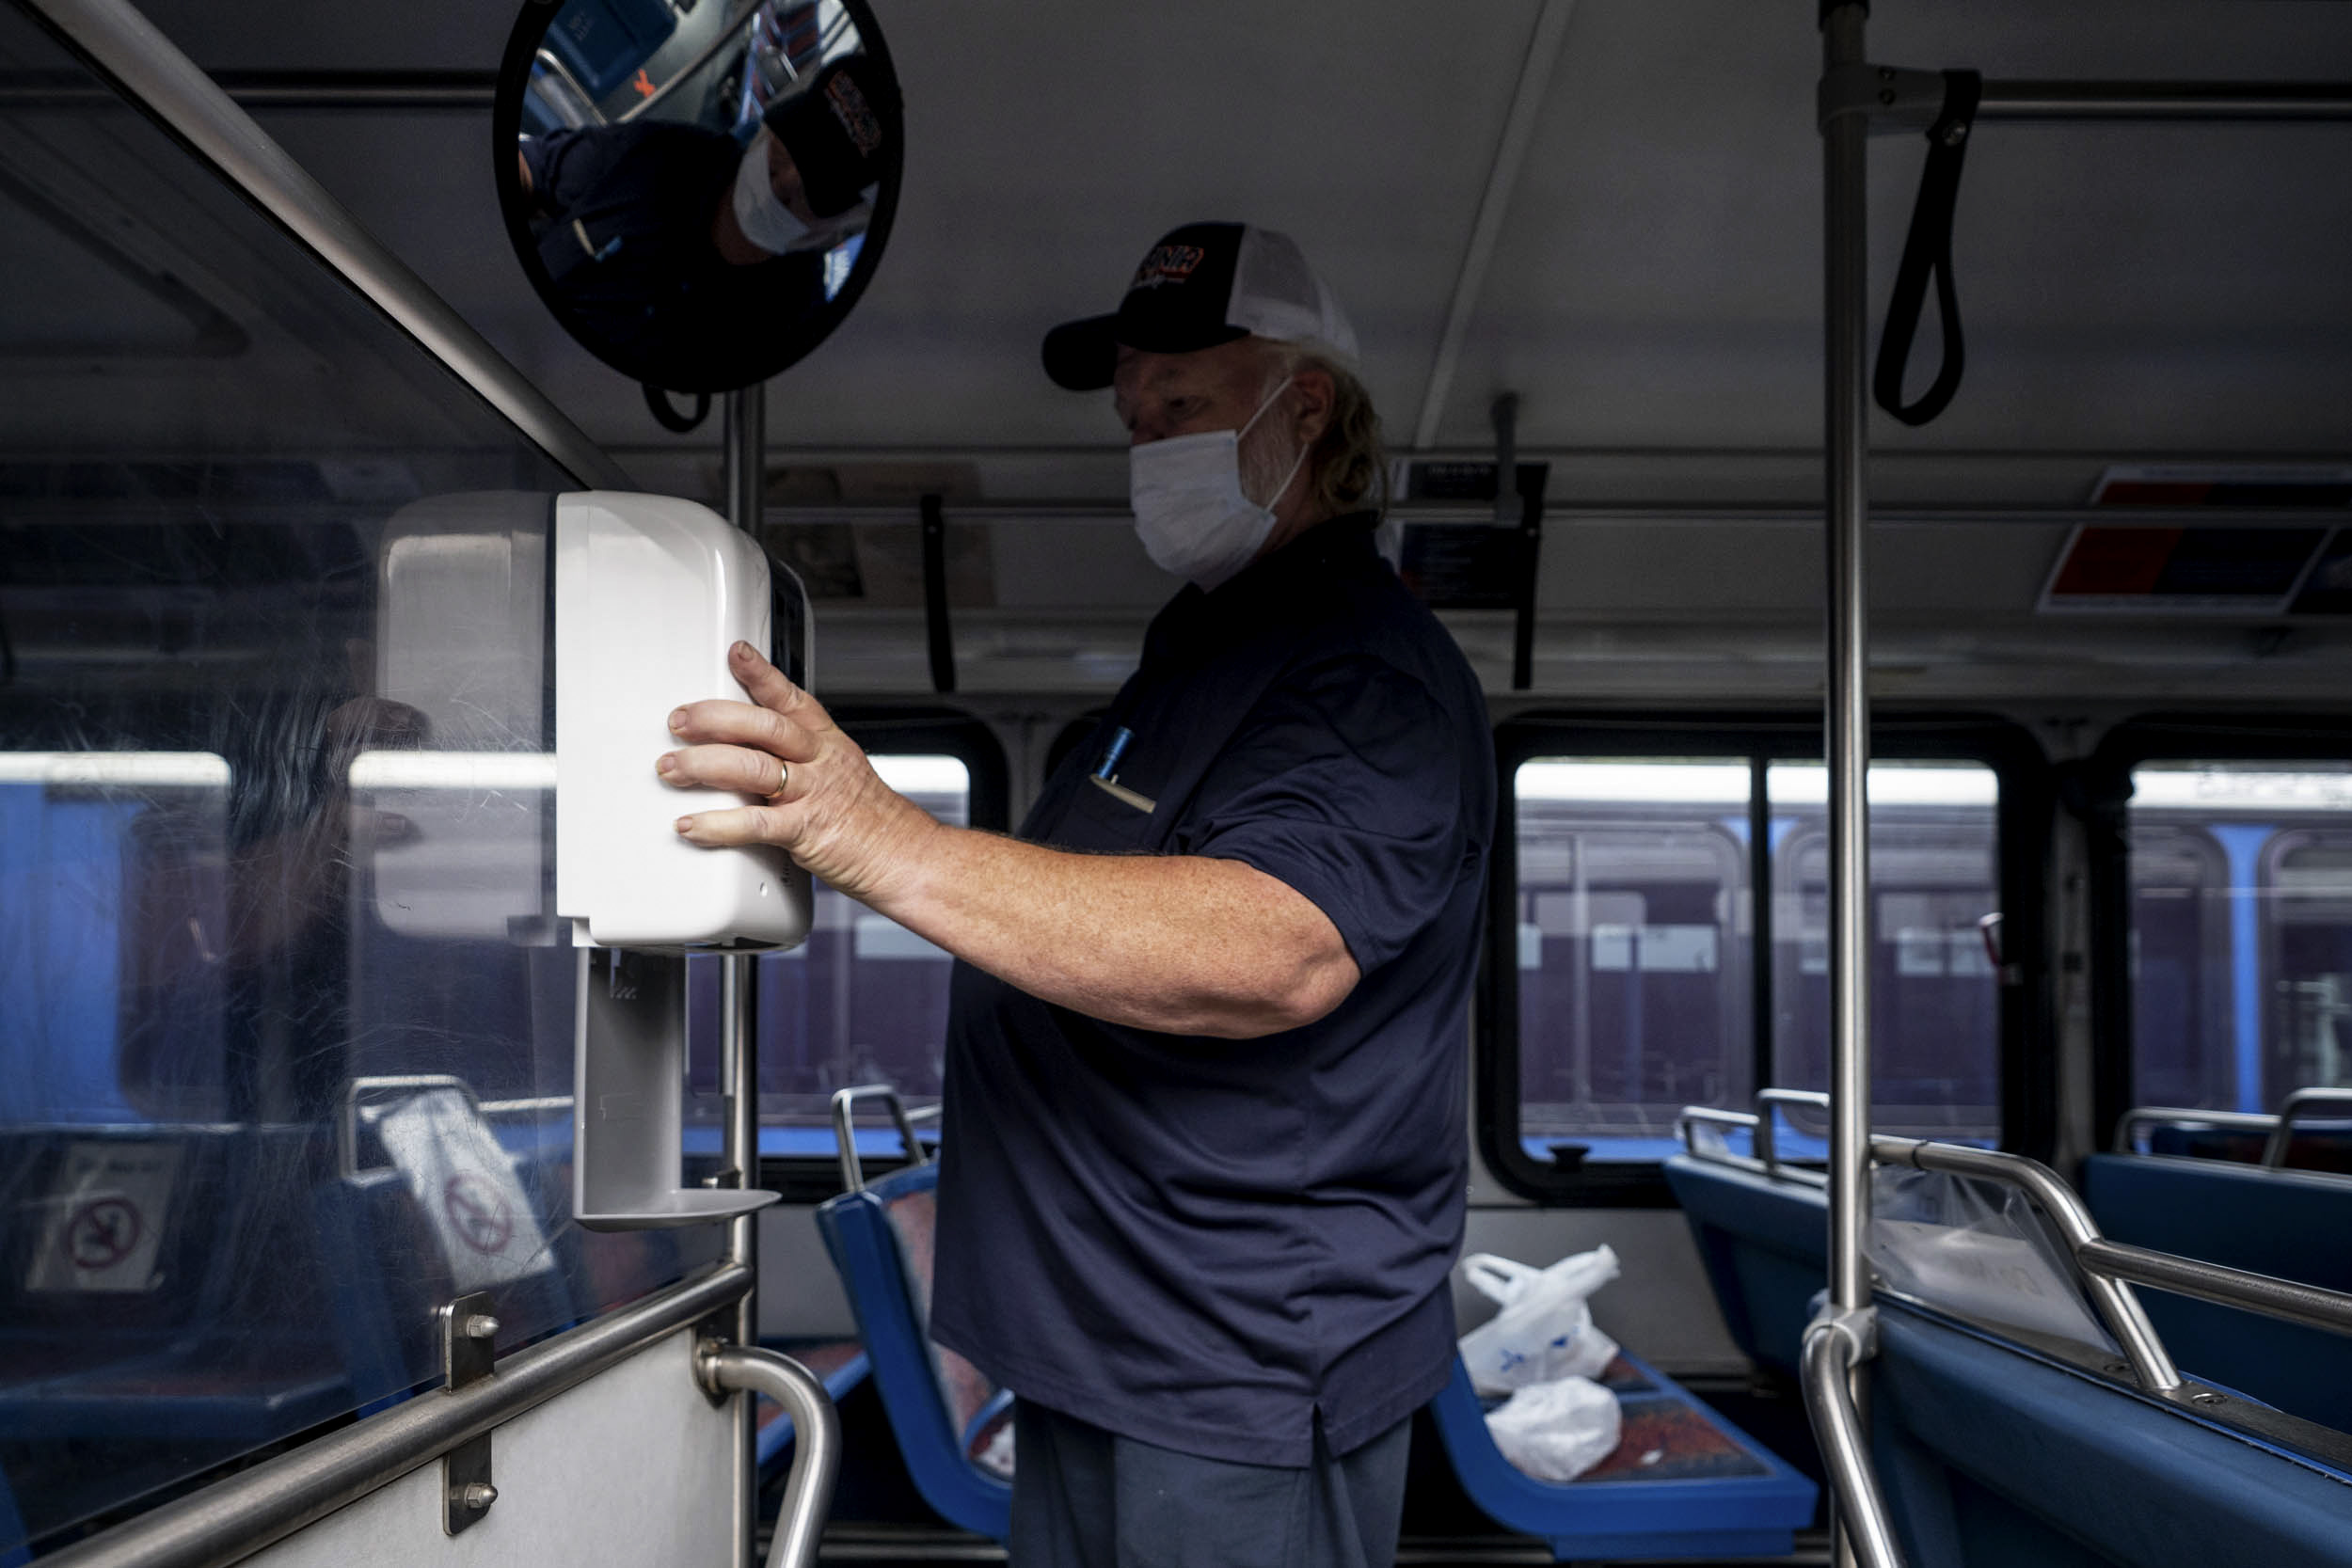 Oscar Goode installs a new hand sanitizer station on a bus